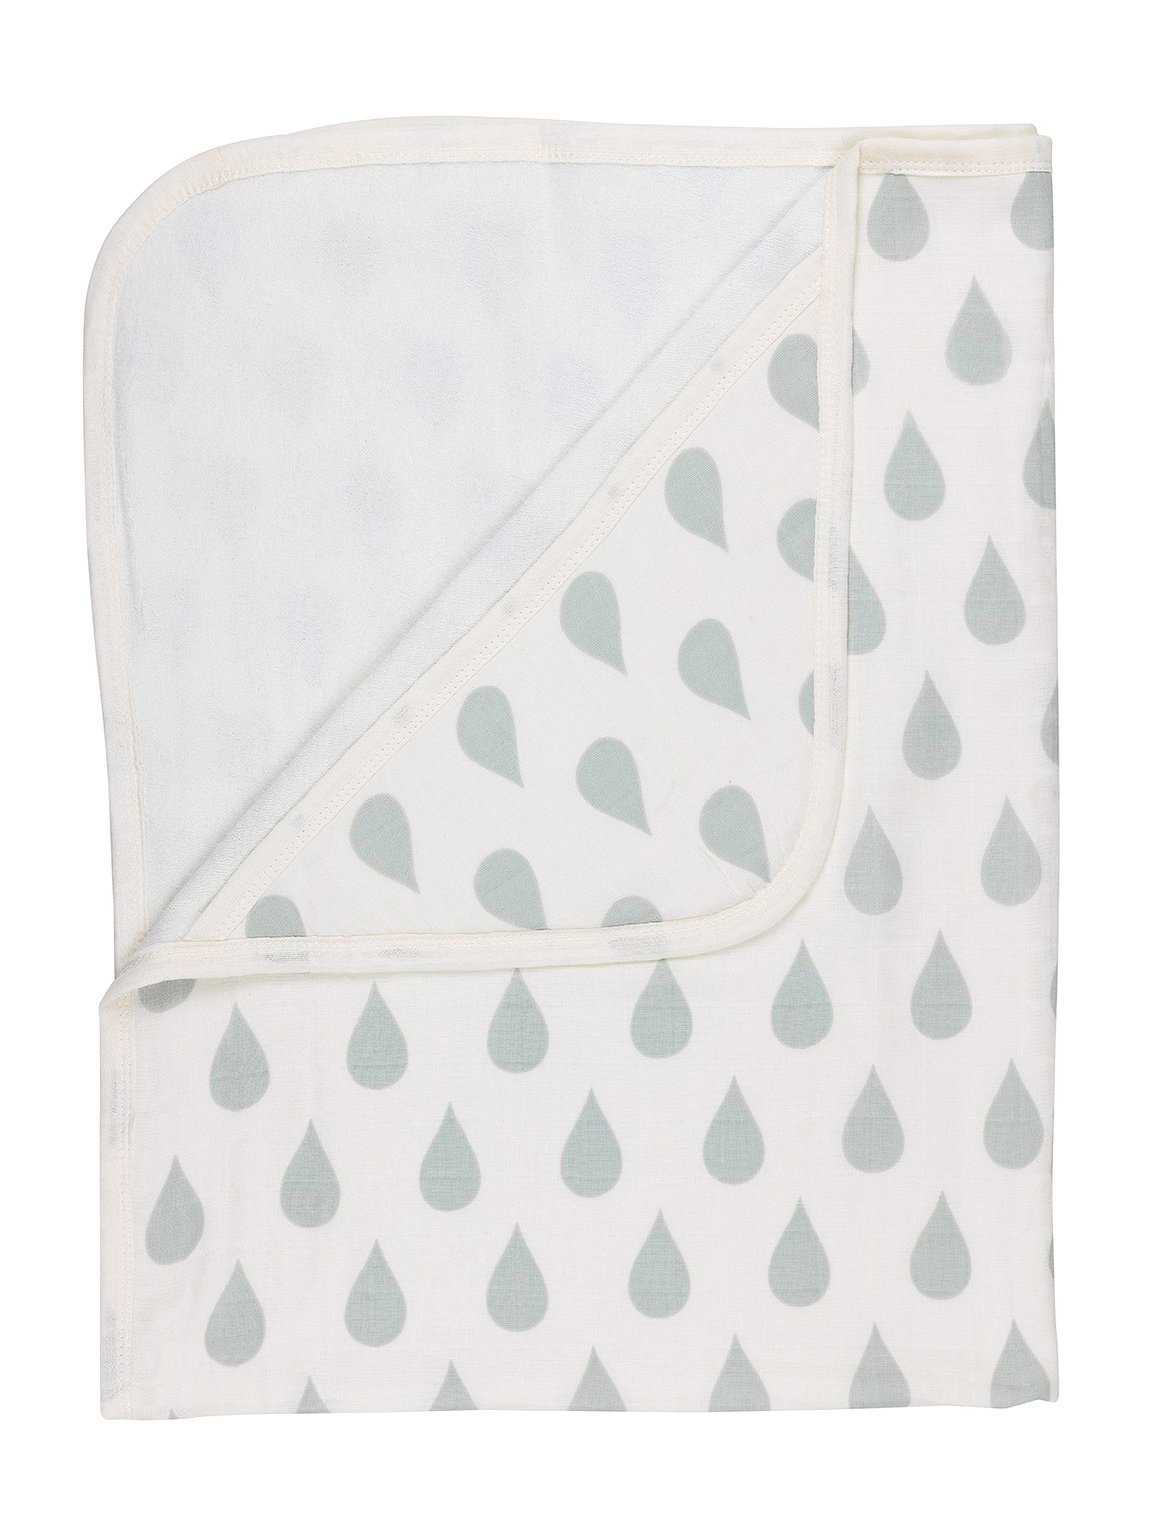 Hooded Towel -  GOTS Certified Organic Cotton - Droplet Print - Towel - Huggee